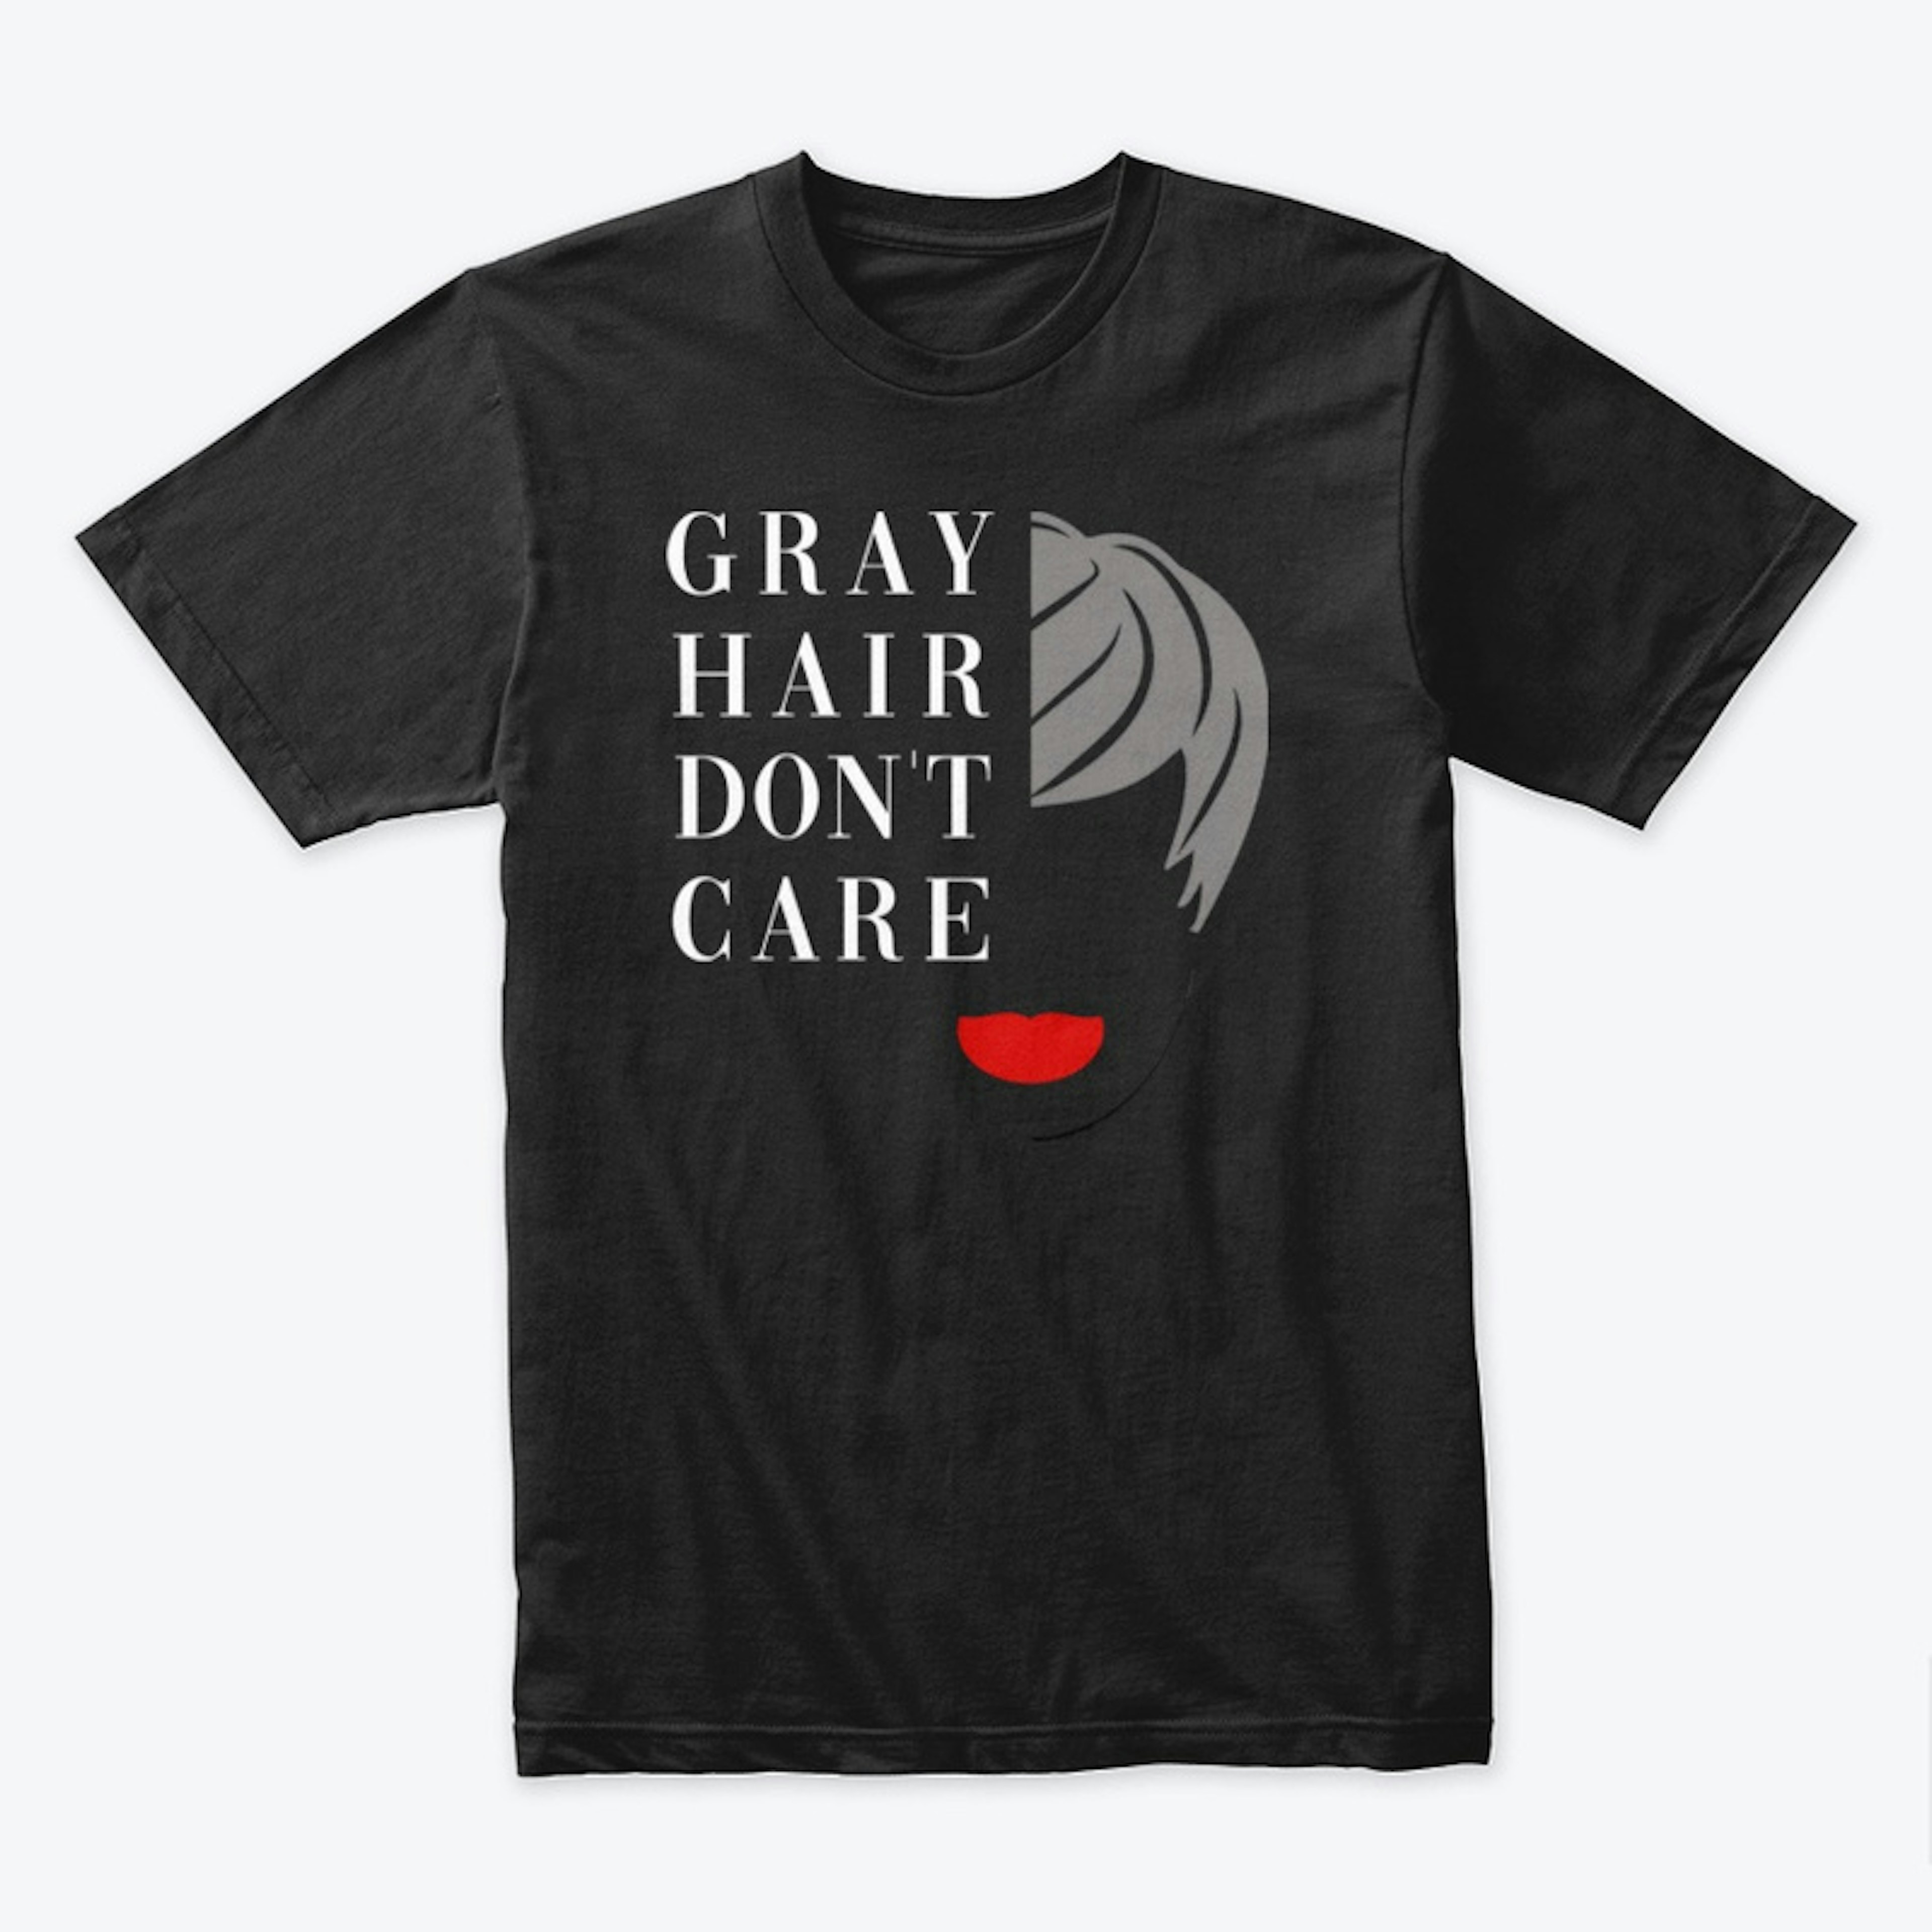 SHORT GRAY HAIR DON'T CARE